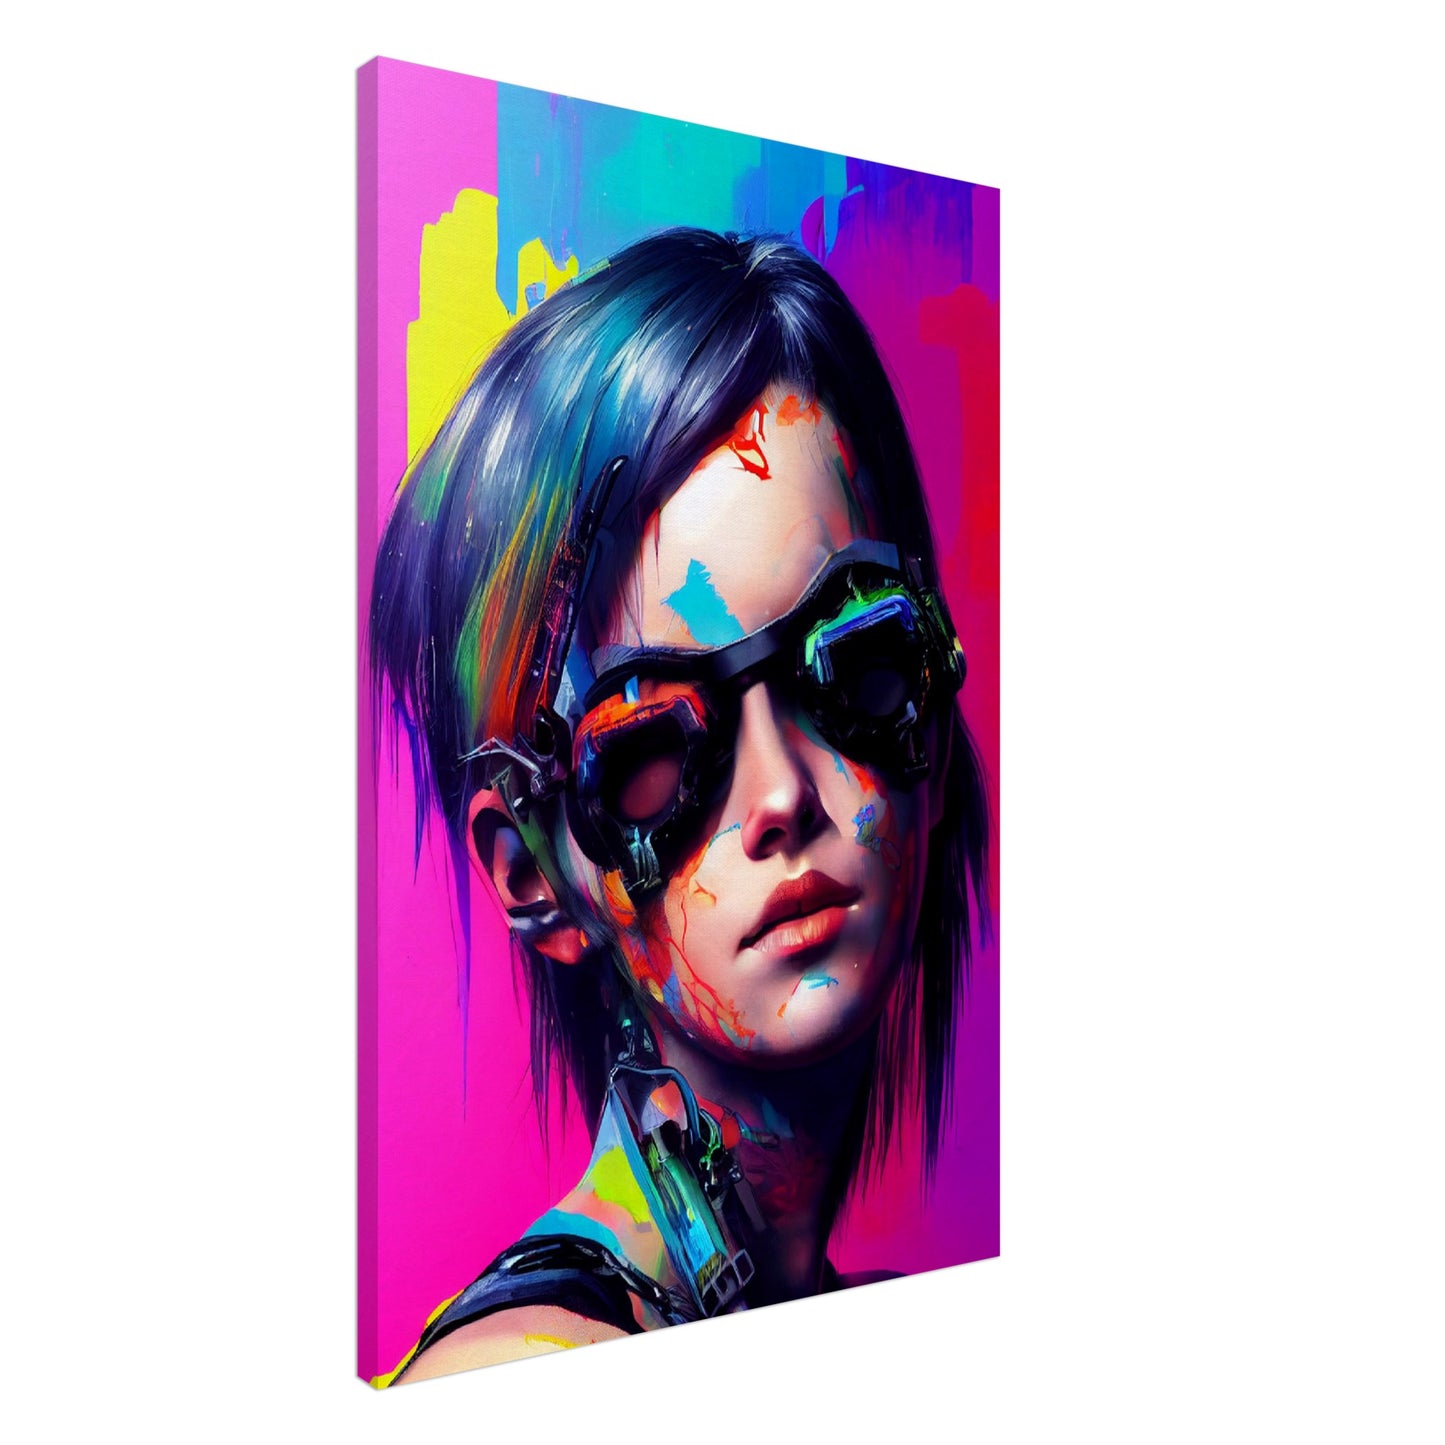 Cyperpunk Girl - Urban Art on Canvas